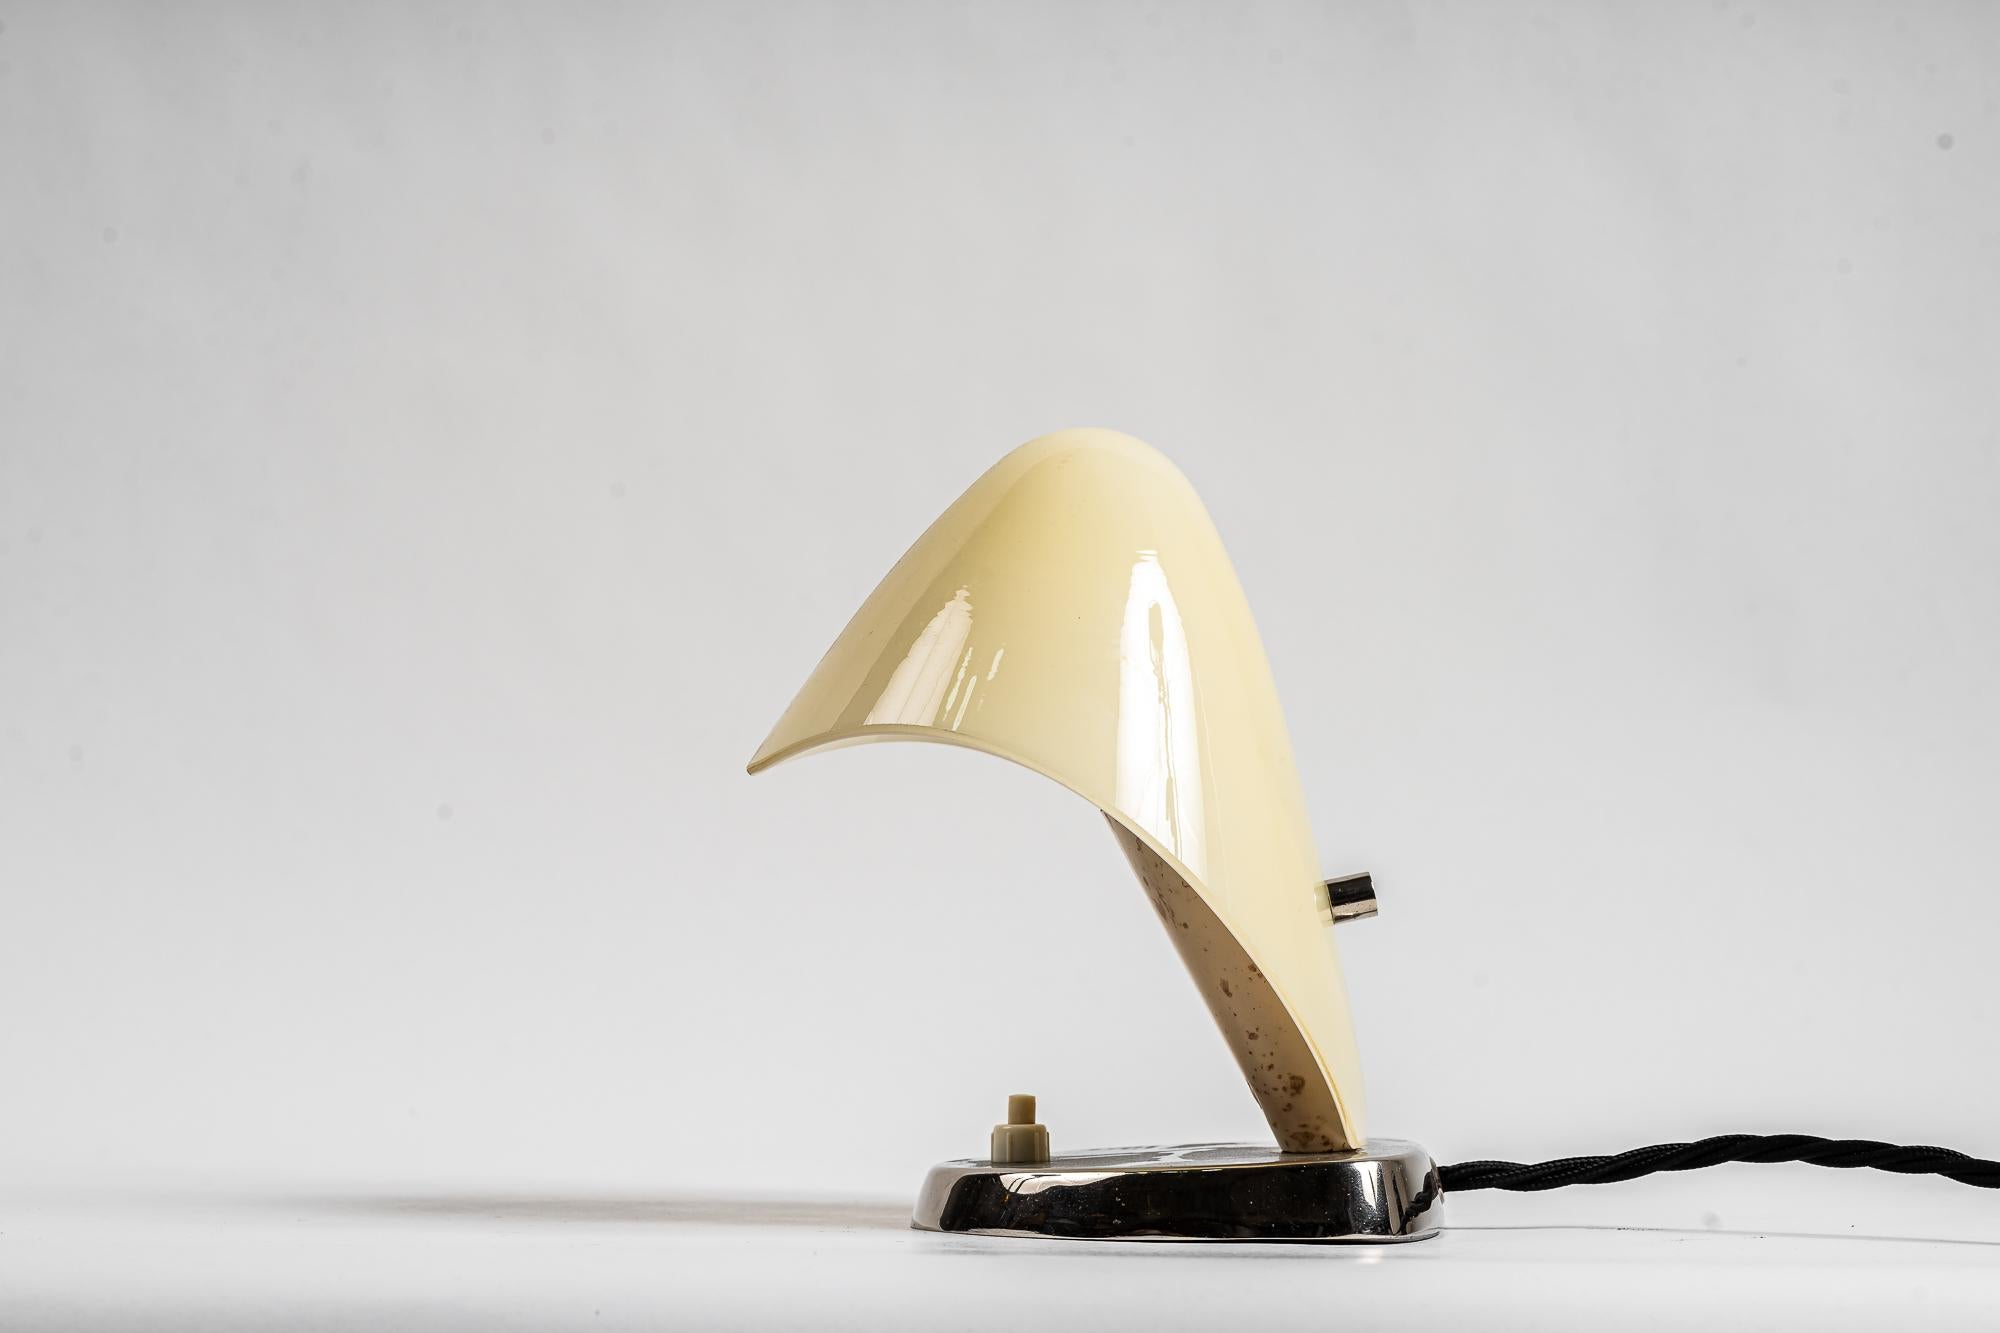 Rupert nikoll Table lamp vienna around 1960s.
Original condition.